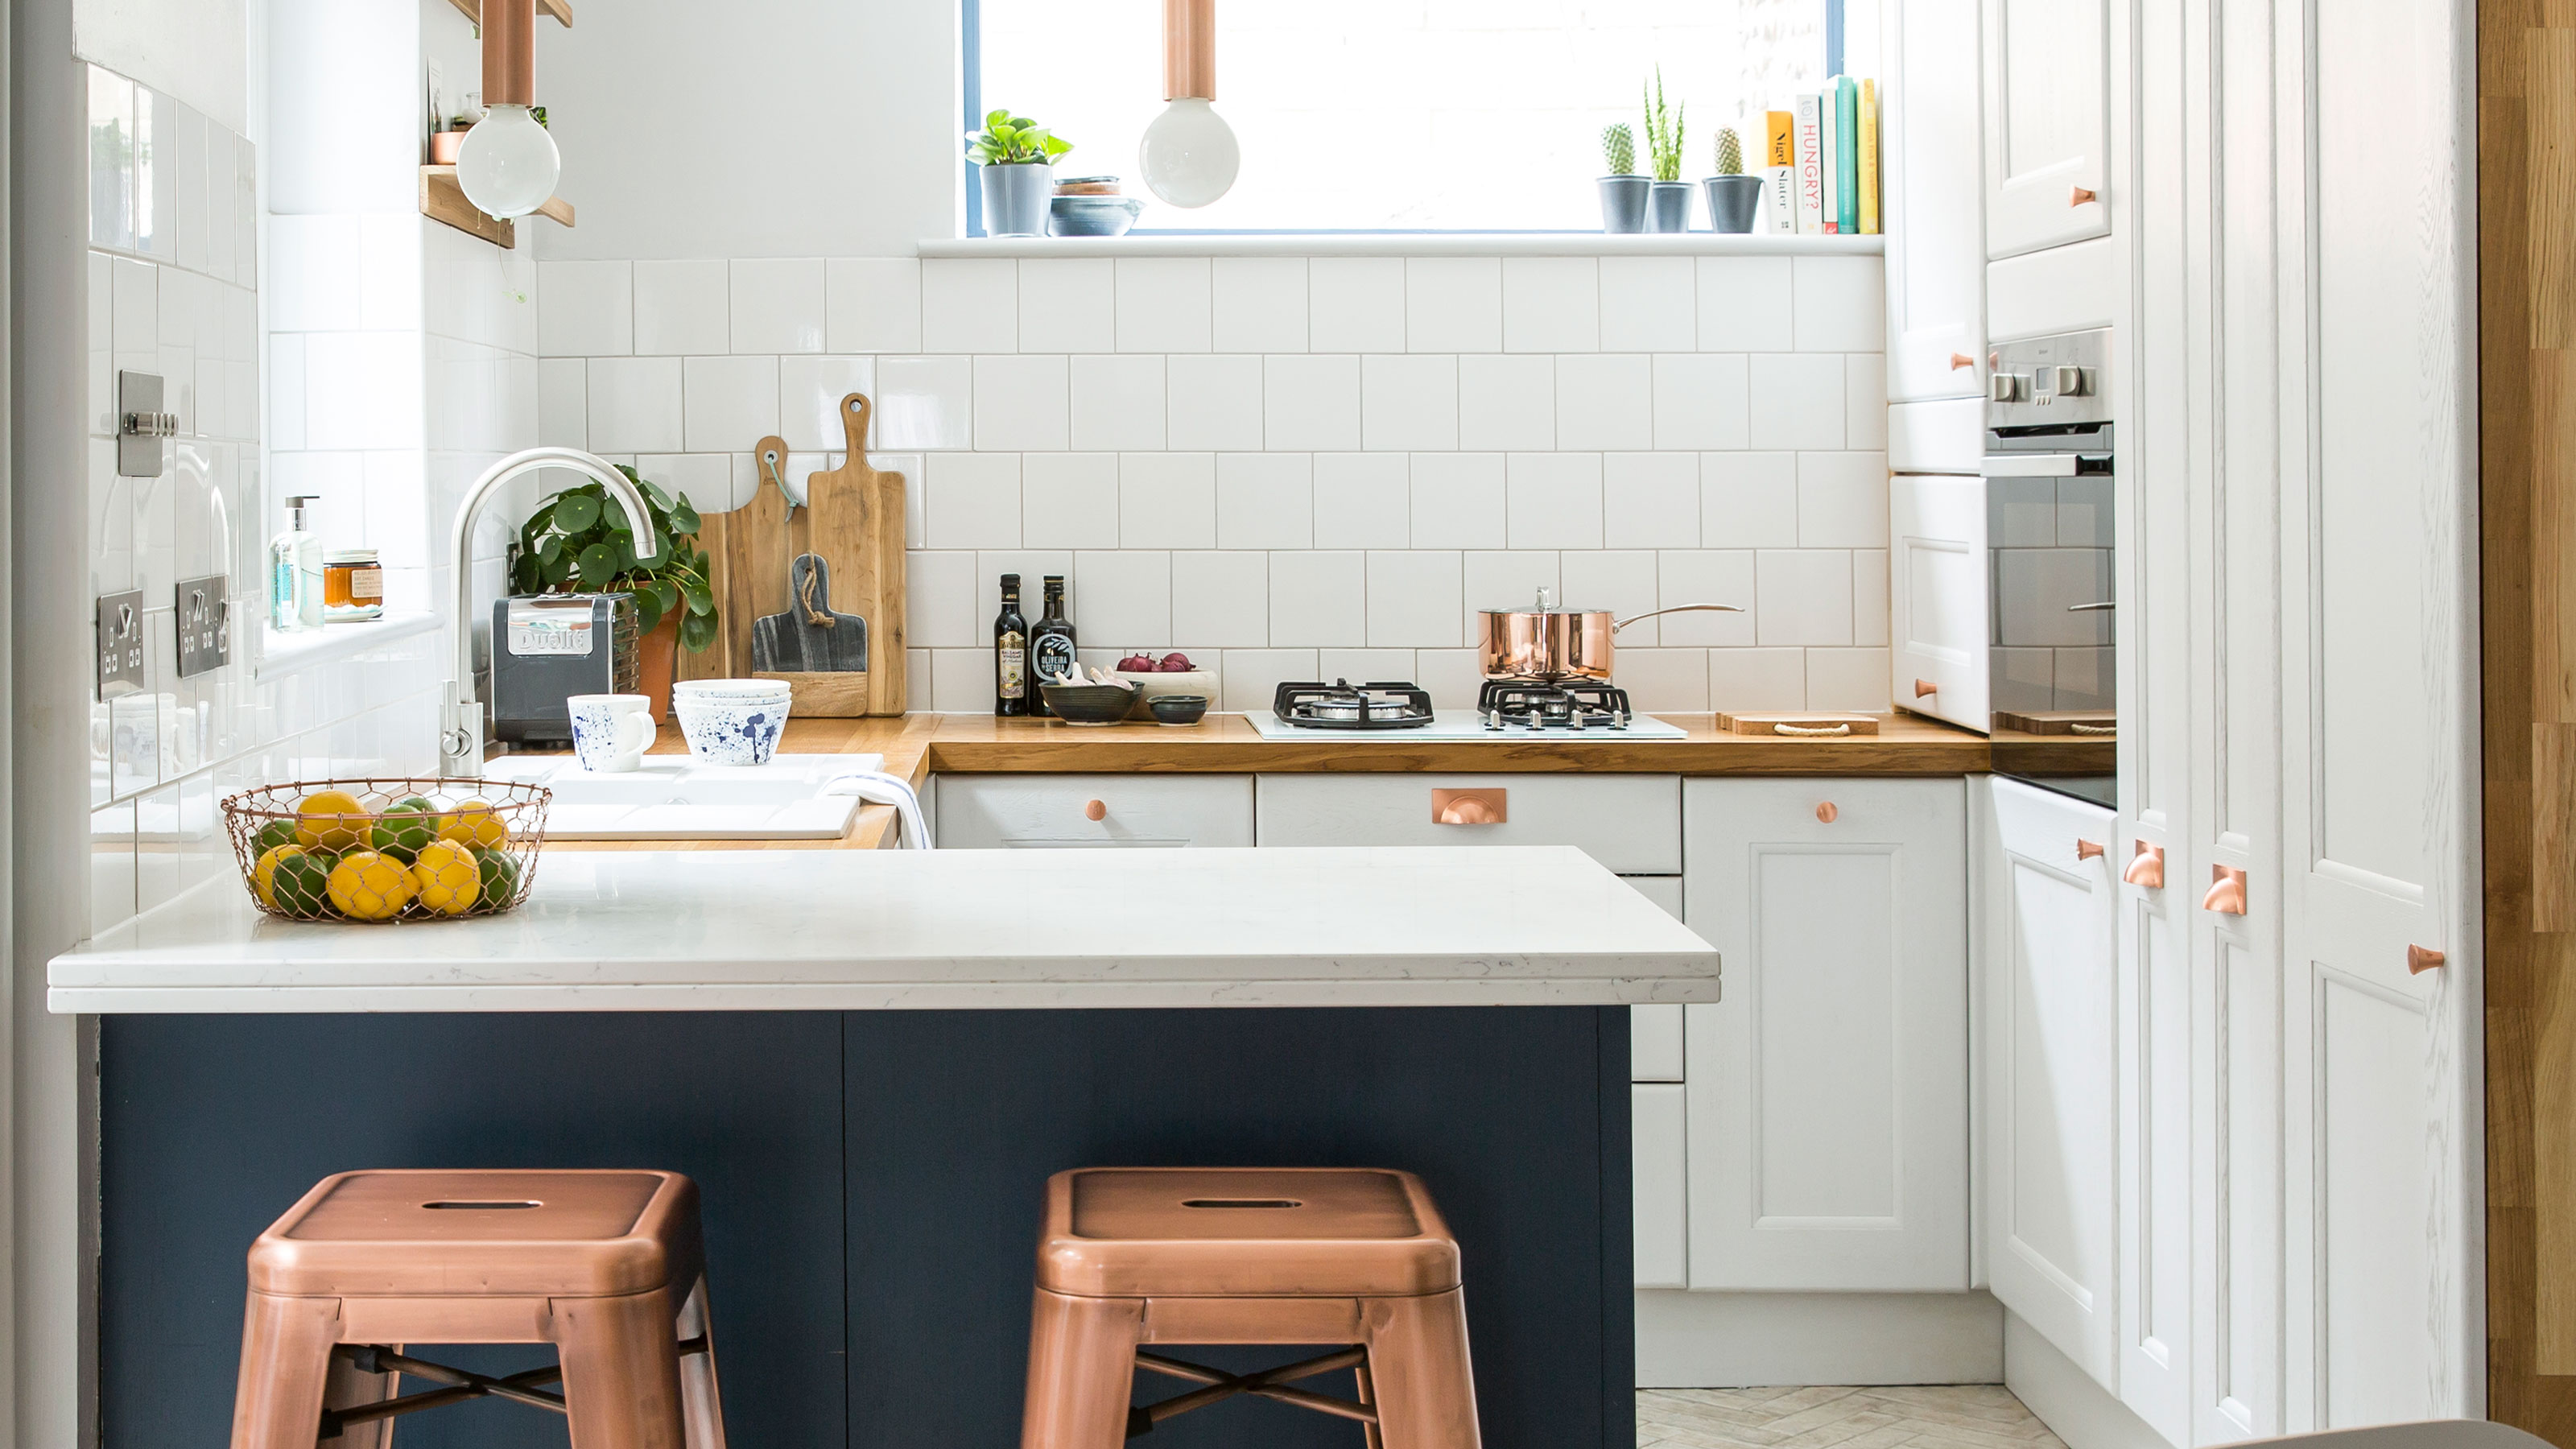 20 Best Small Kitchen Ideas Tiny Kitchen Design And Decor ...